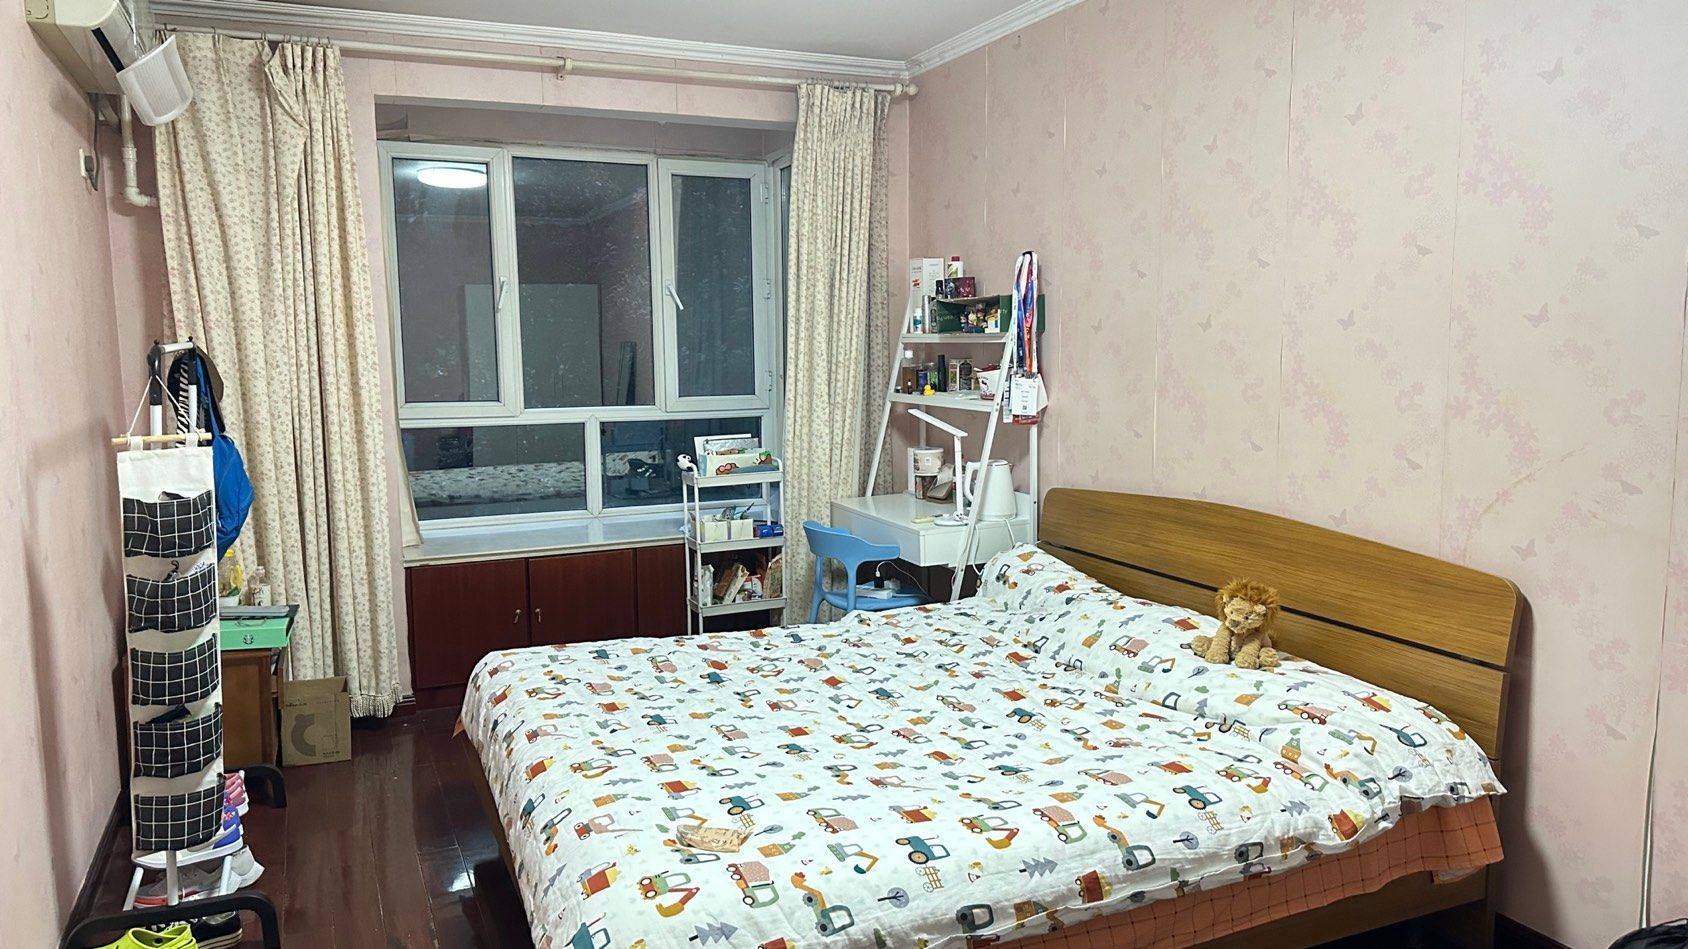 Beijing-Changping-Cozy Home,Clean&Comfy,No Gender Limit